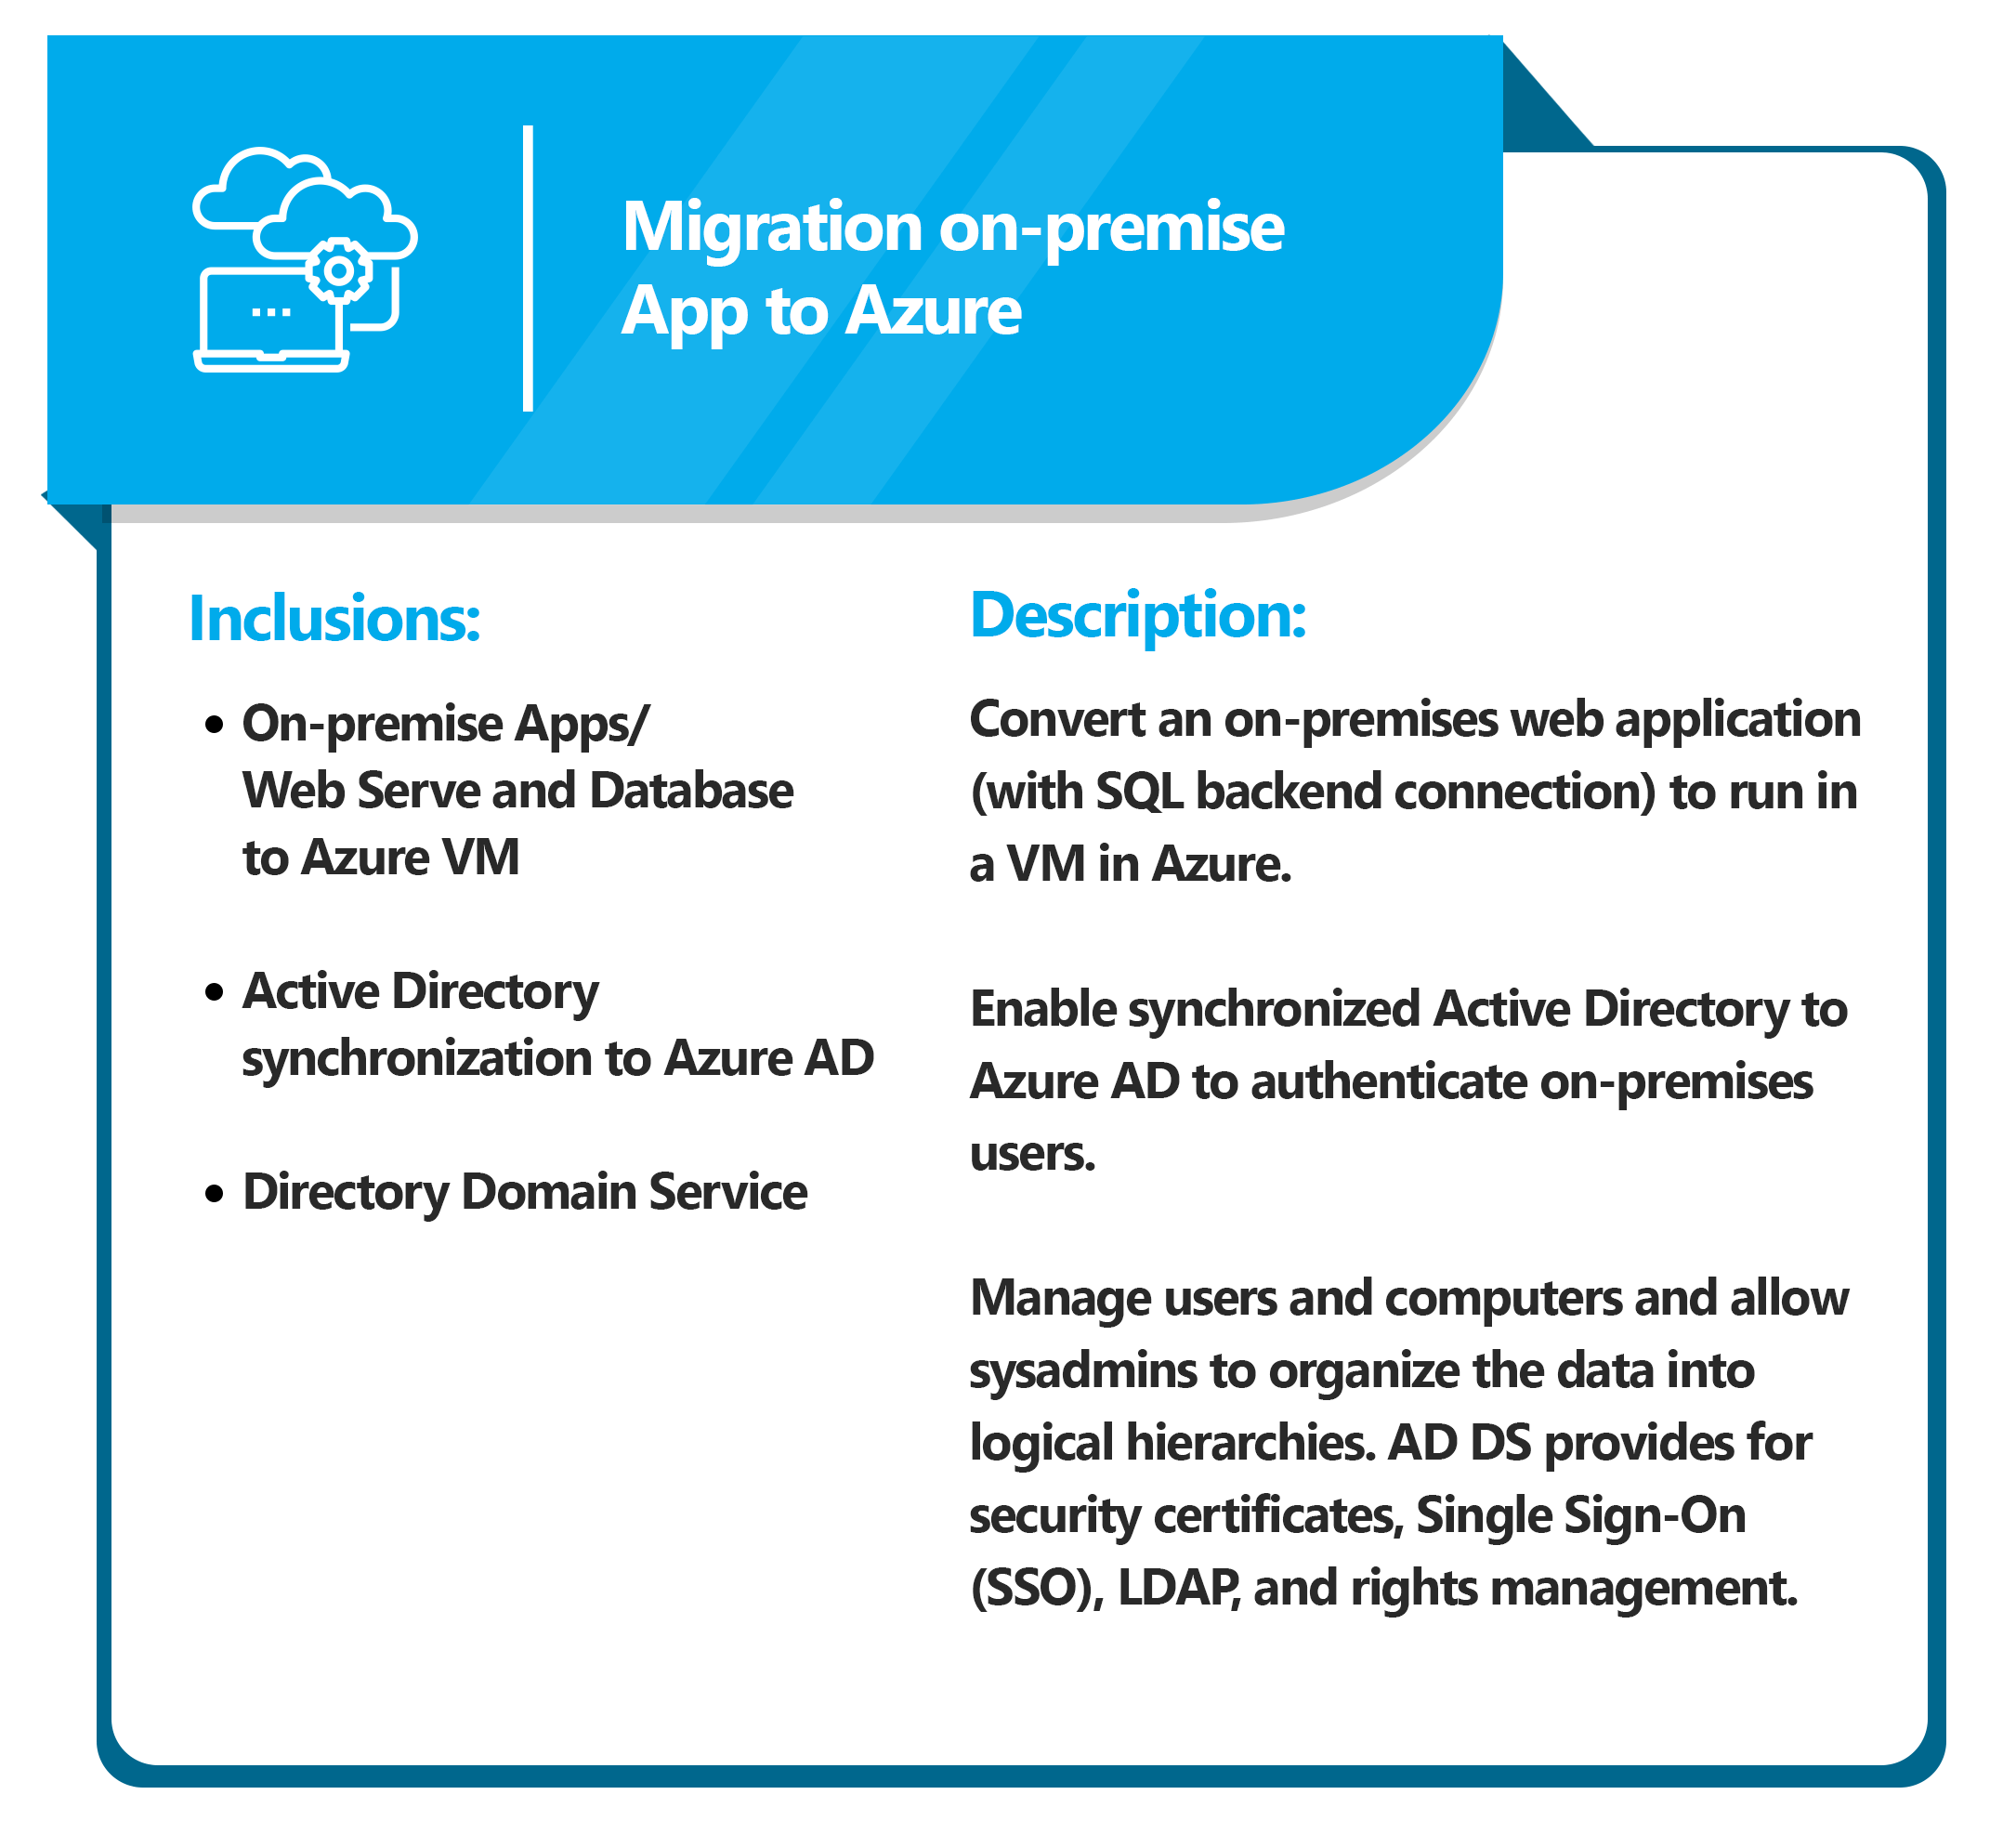 Migration App to Azure